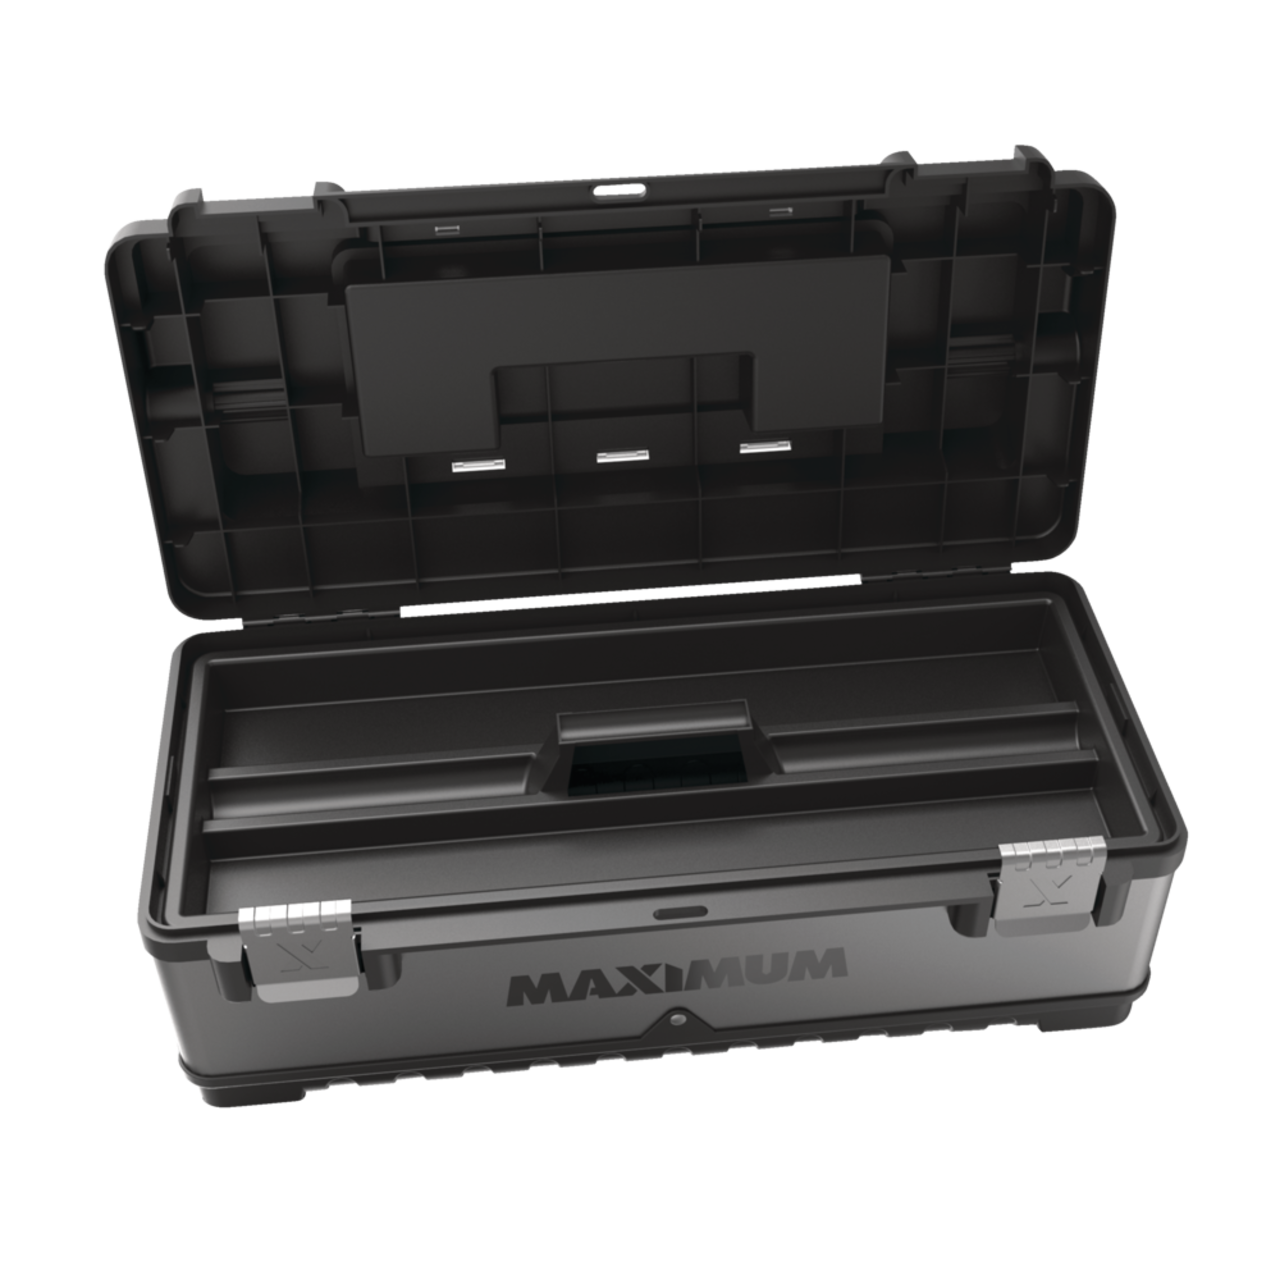 MAXIMUM Portable Plastic & Metal Tool Box w/ Removable Tray & Organizer,  23-in